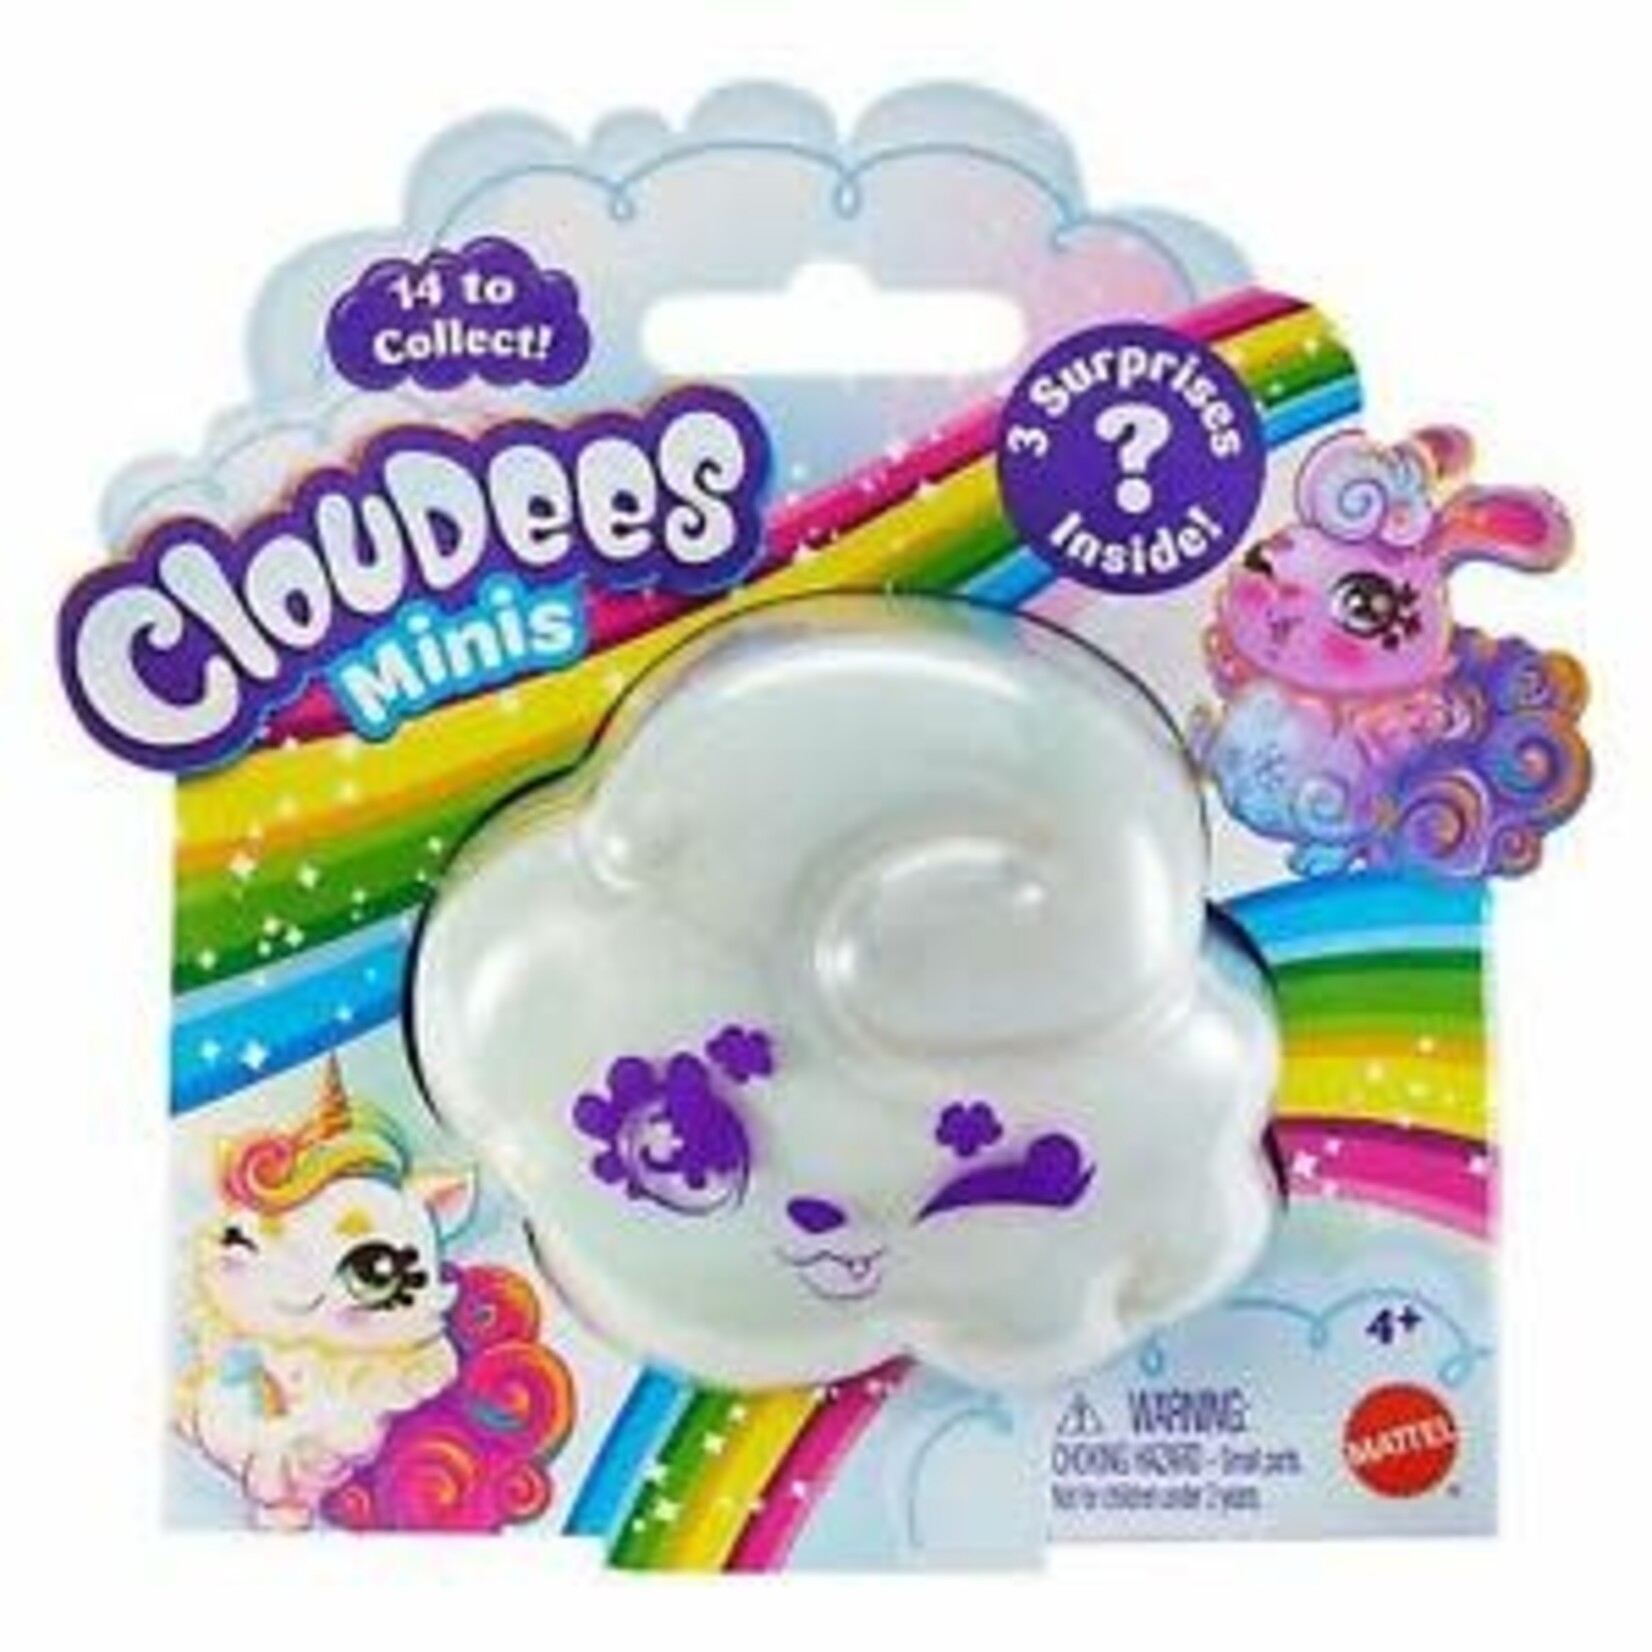 Cloudees Mini Pet by Mattel